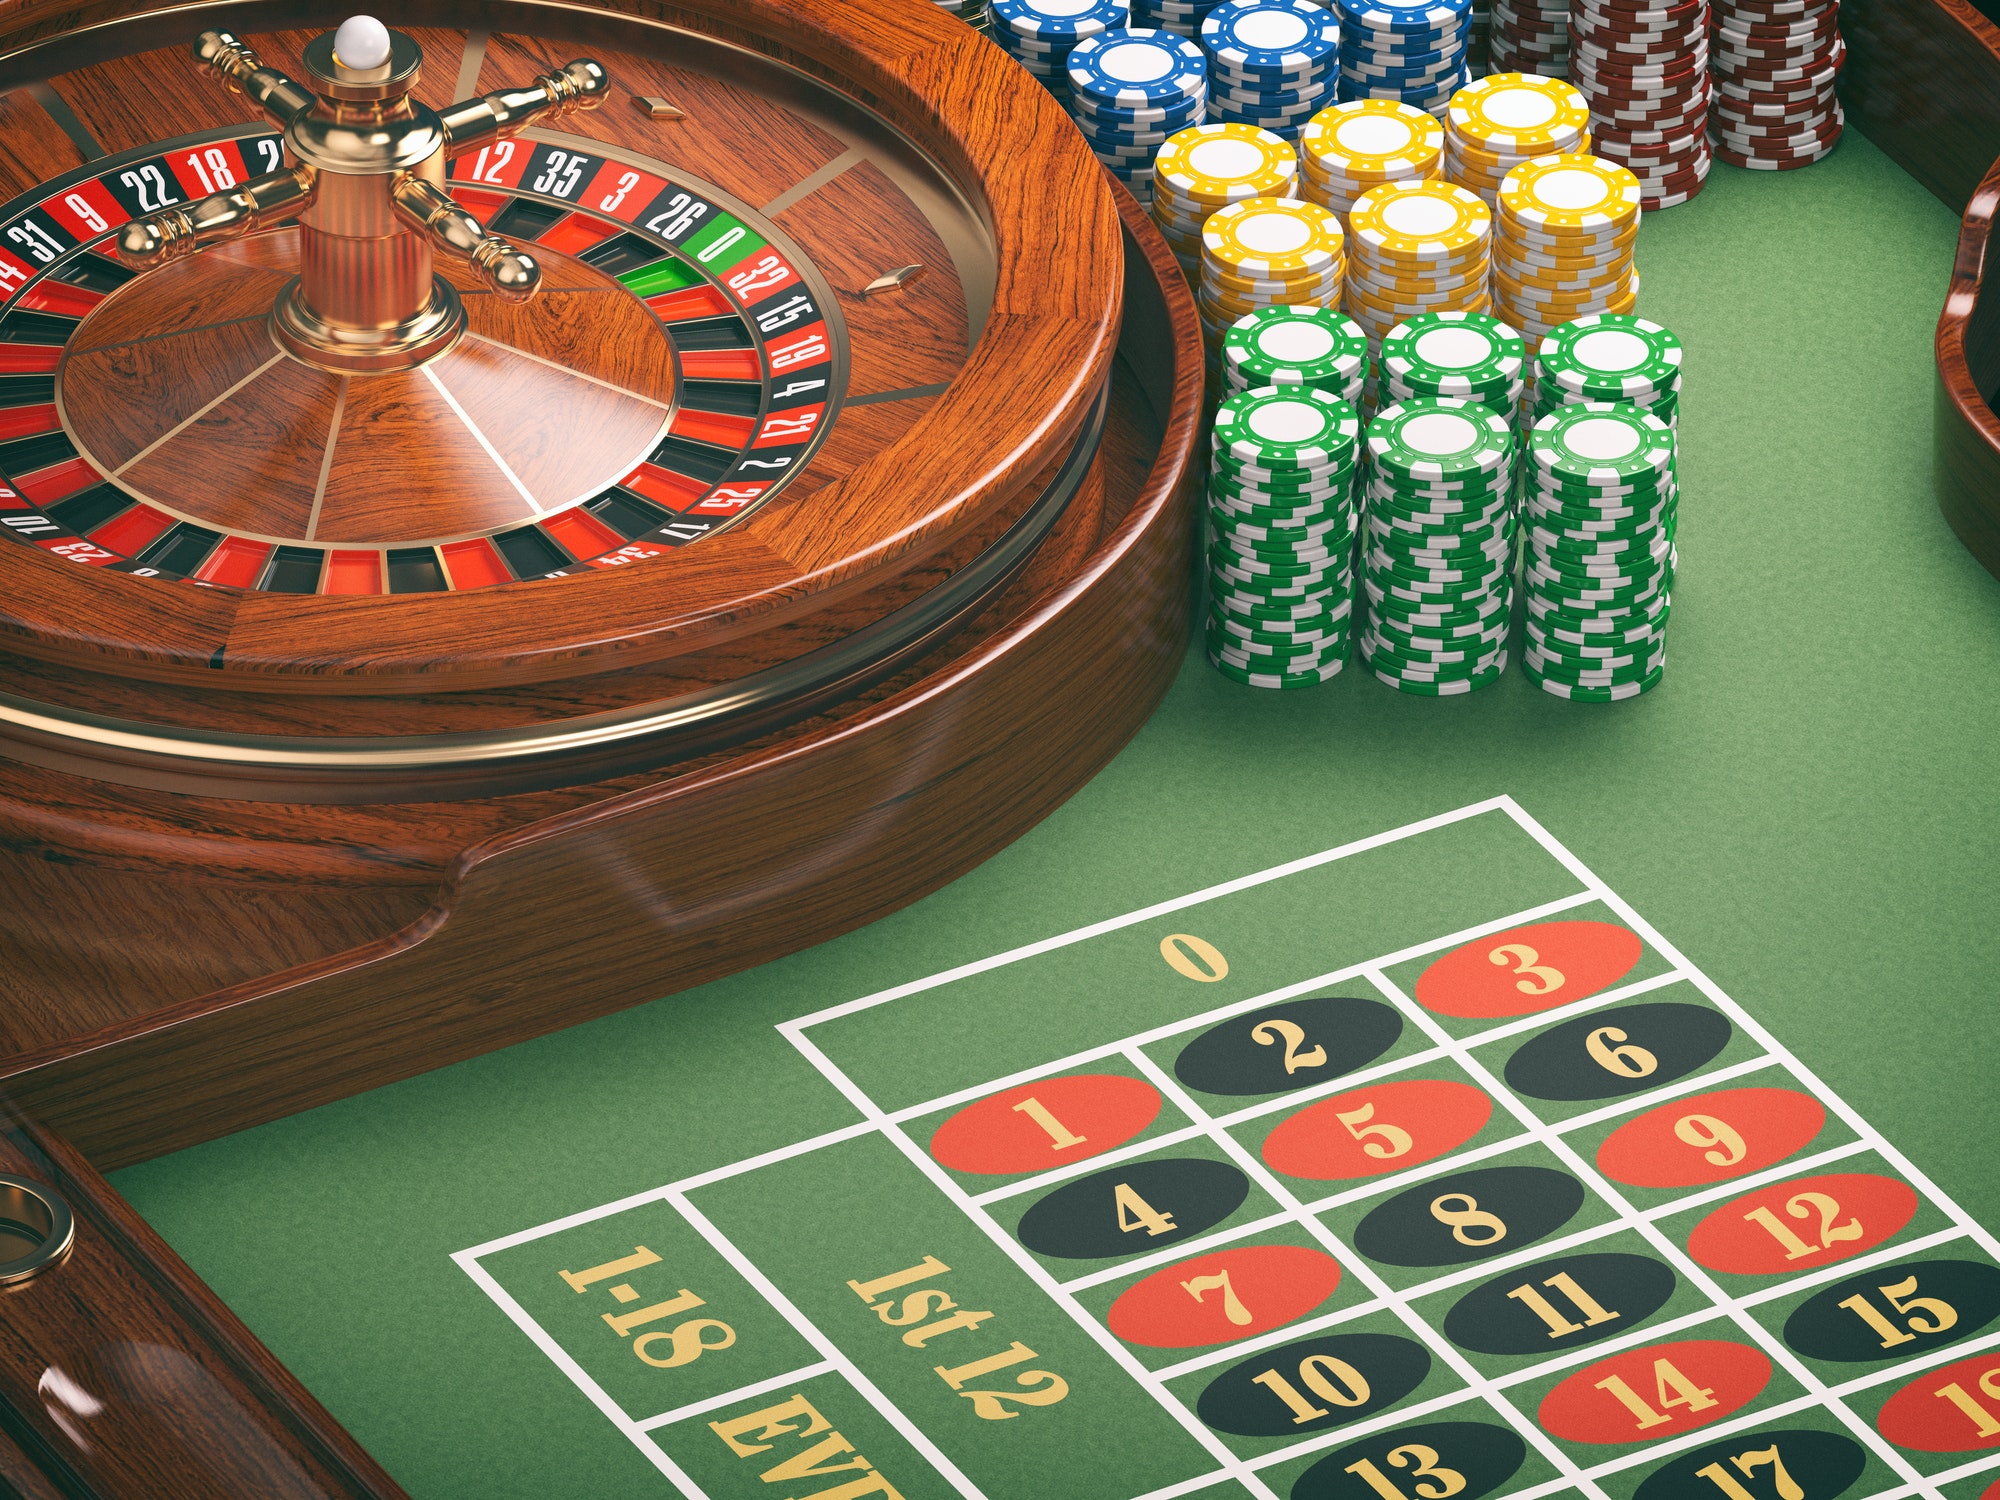 Types of online blackjack games for real money